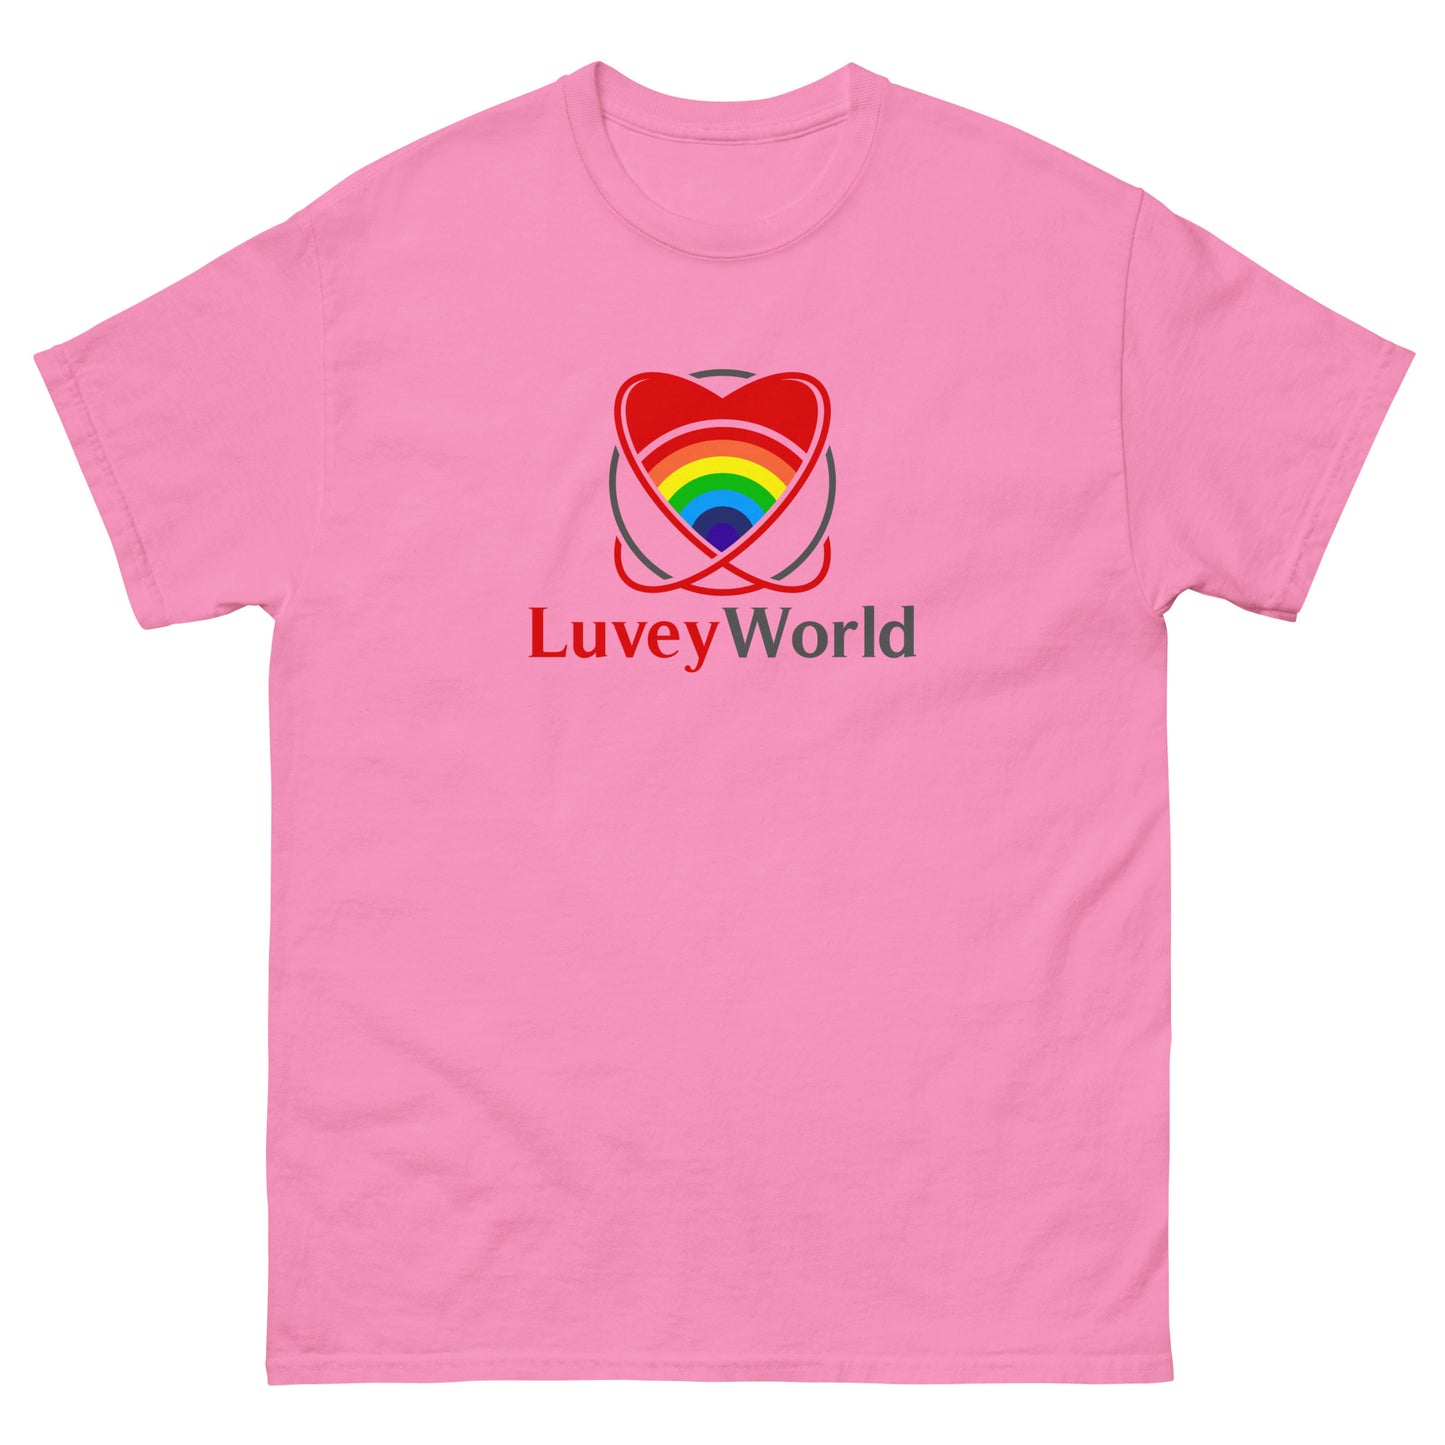 LuveyWorld classic t-shirt